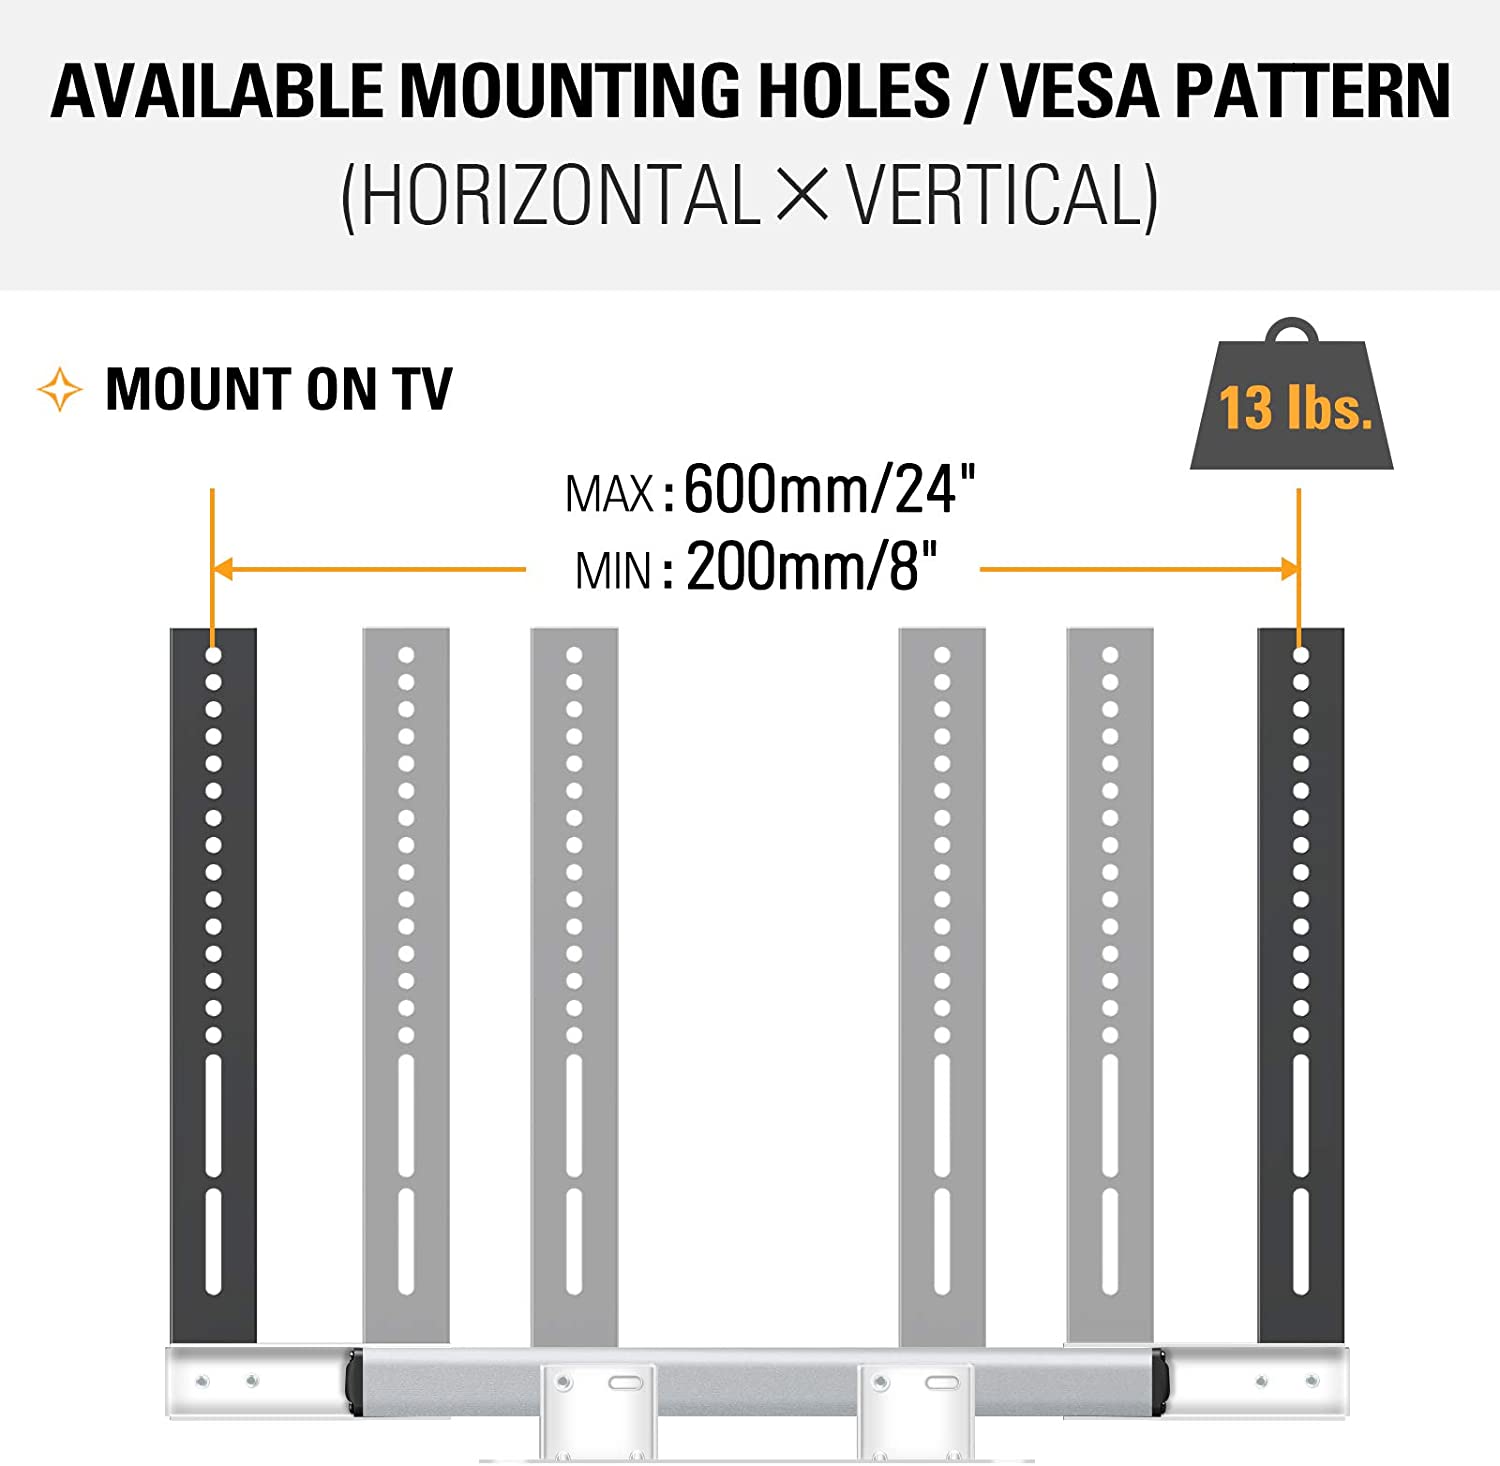 VESA hole pattern compatible